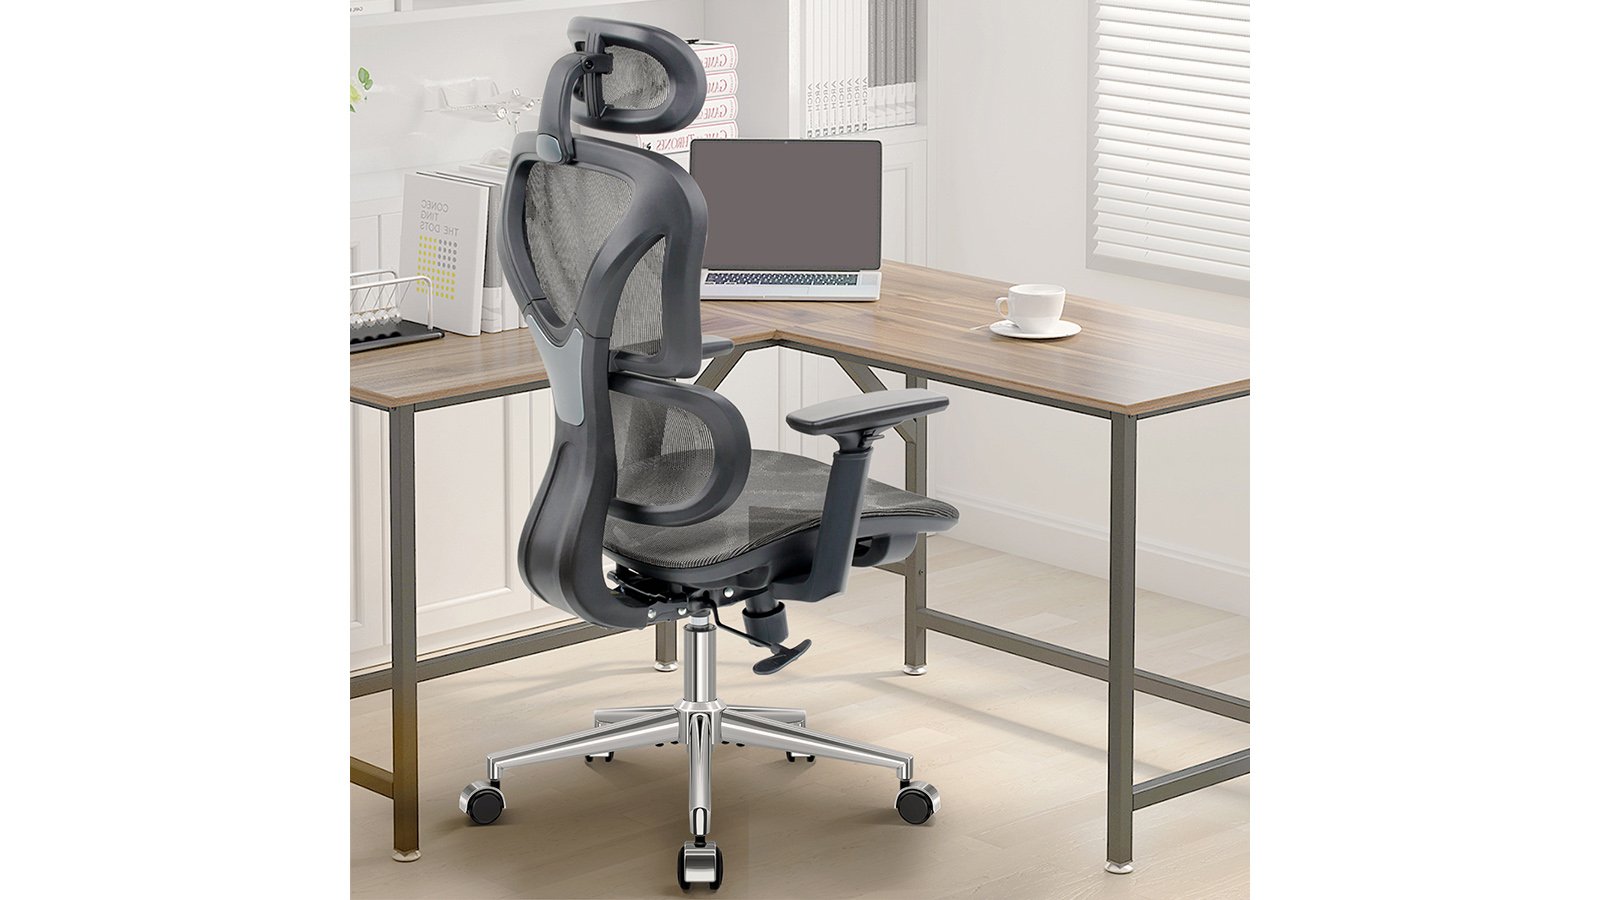 KERDOM Ergonomic Chair: Double Lumbar Support